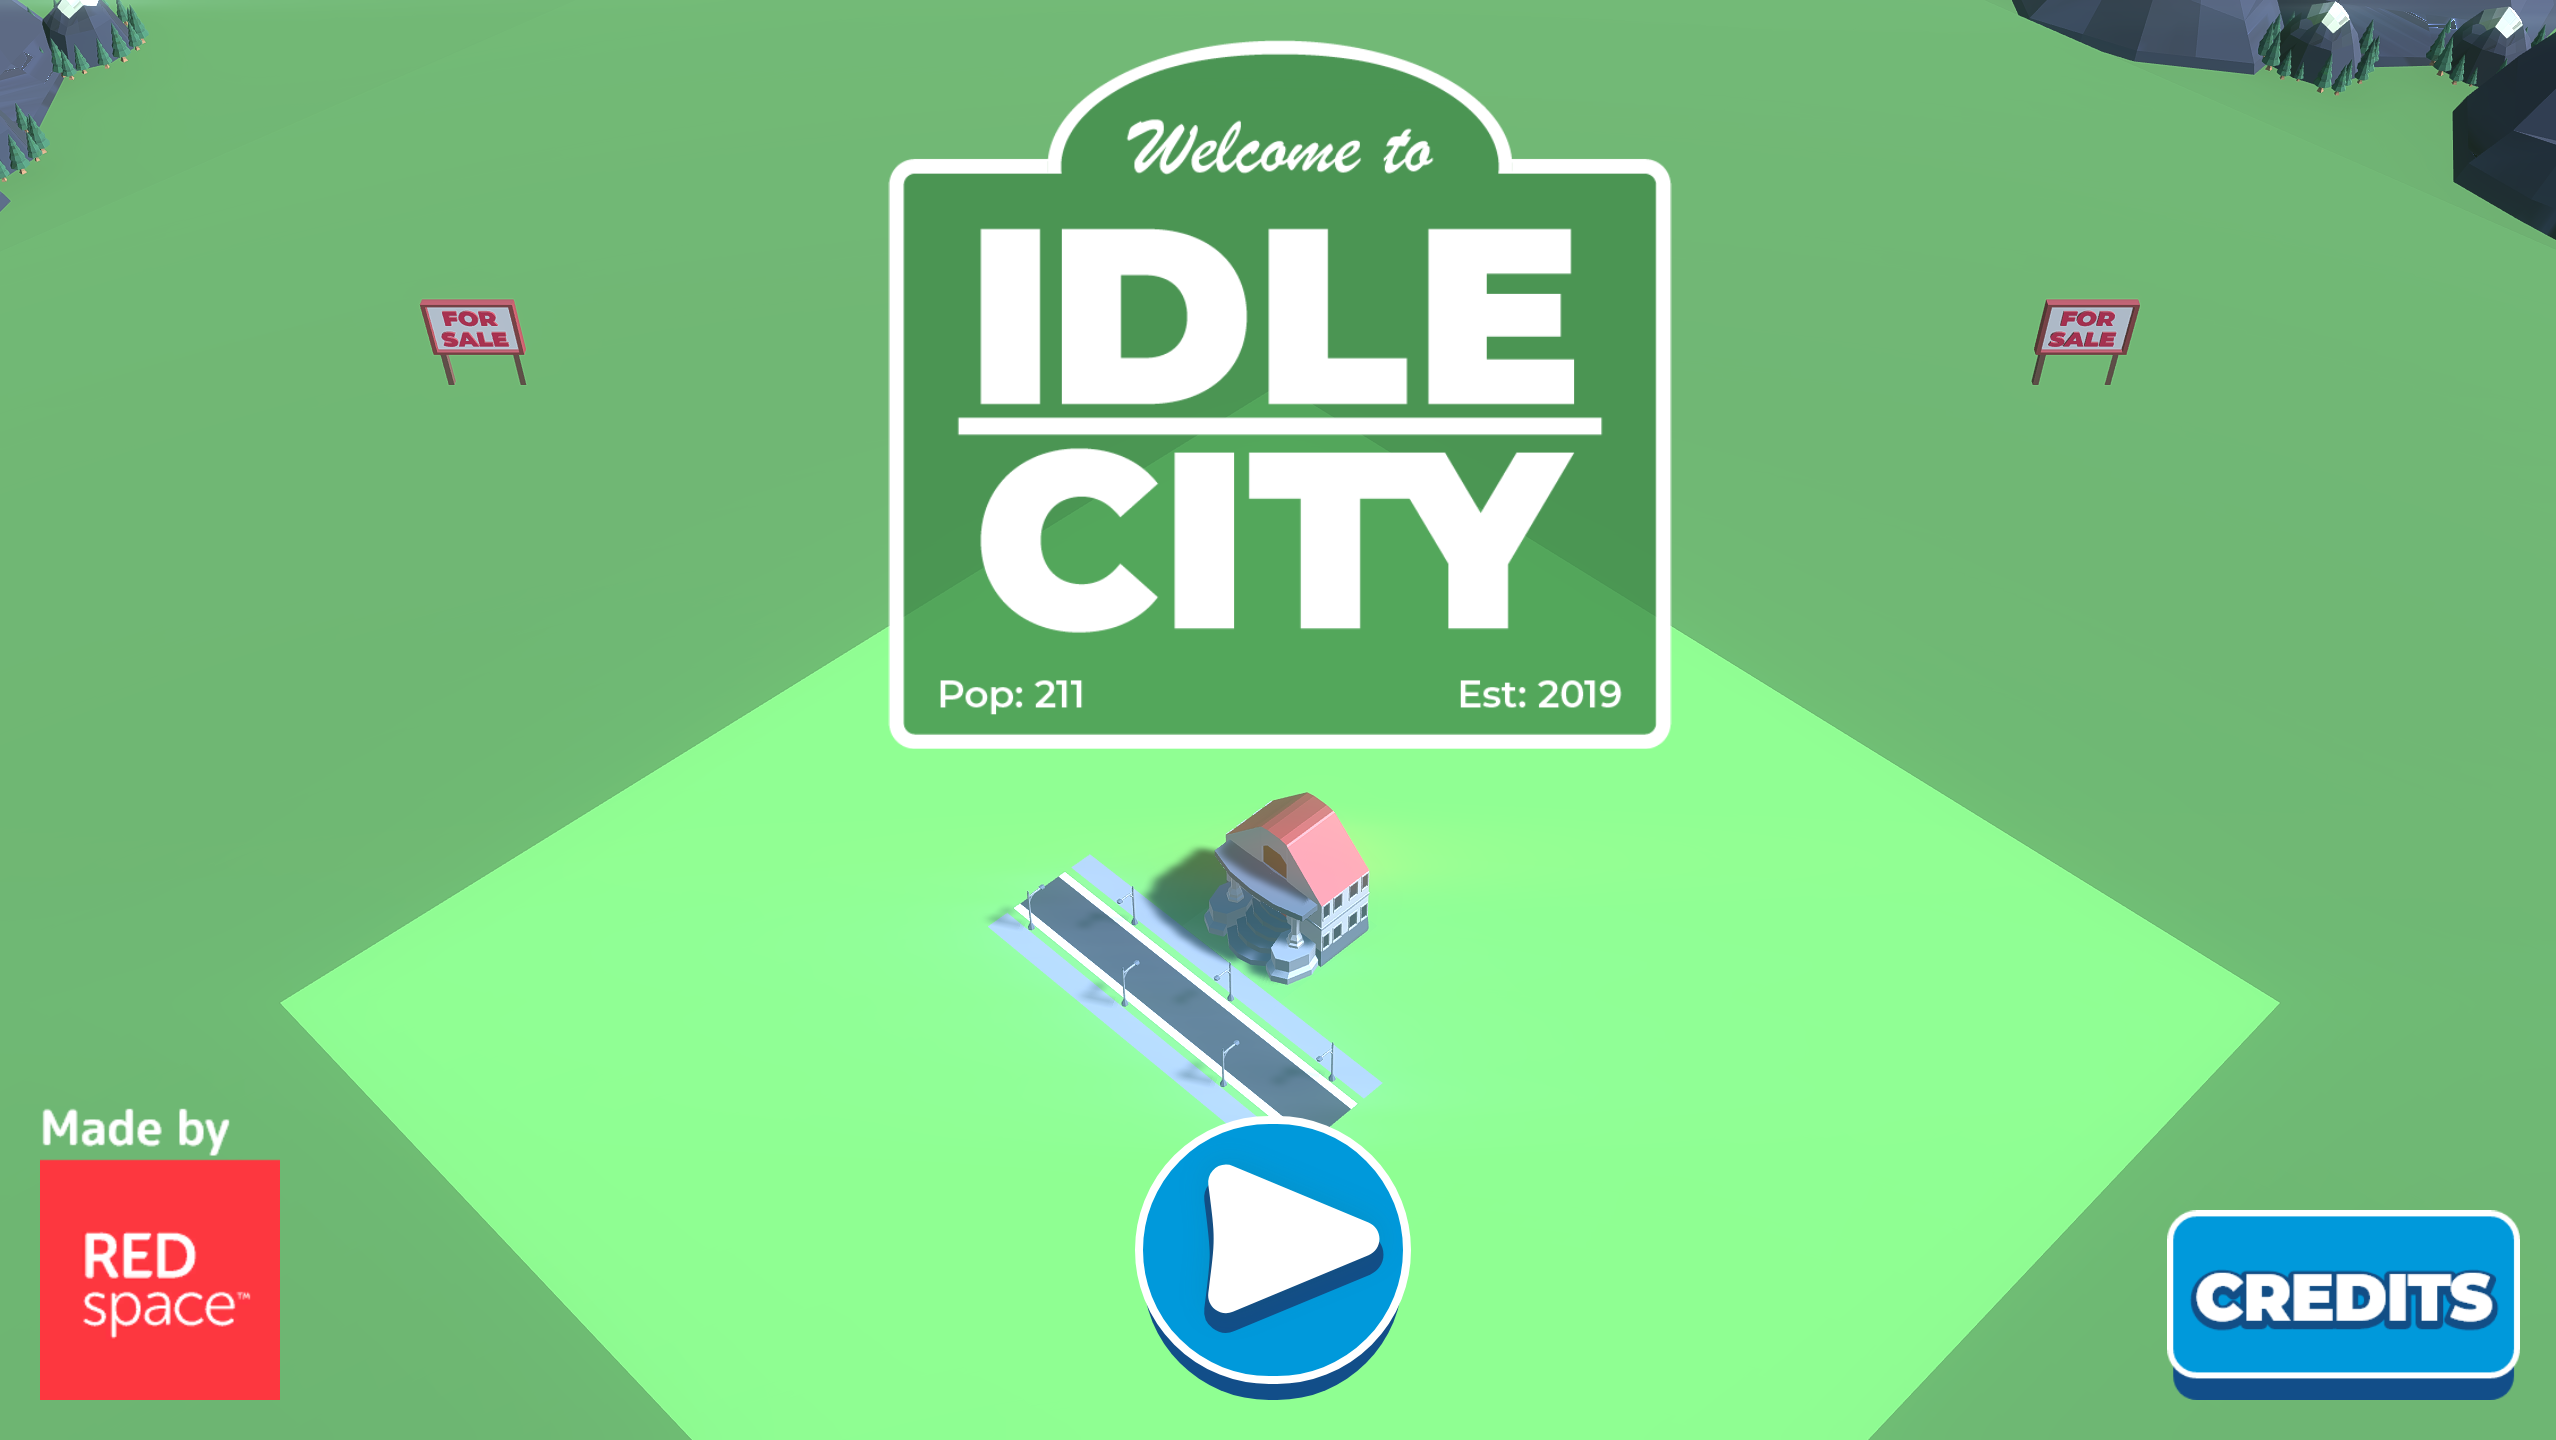 Idle City